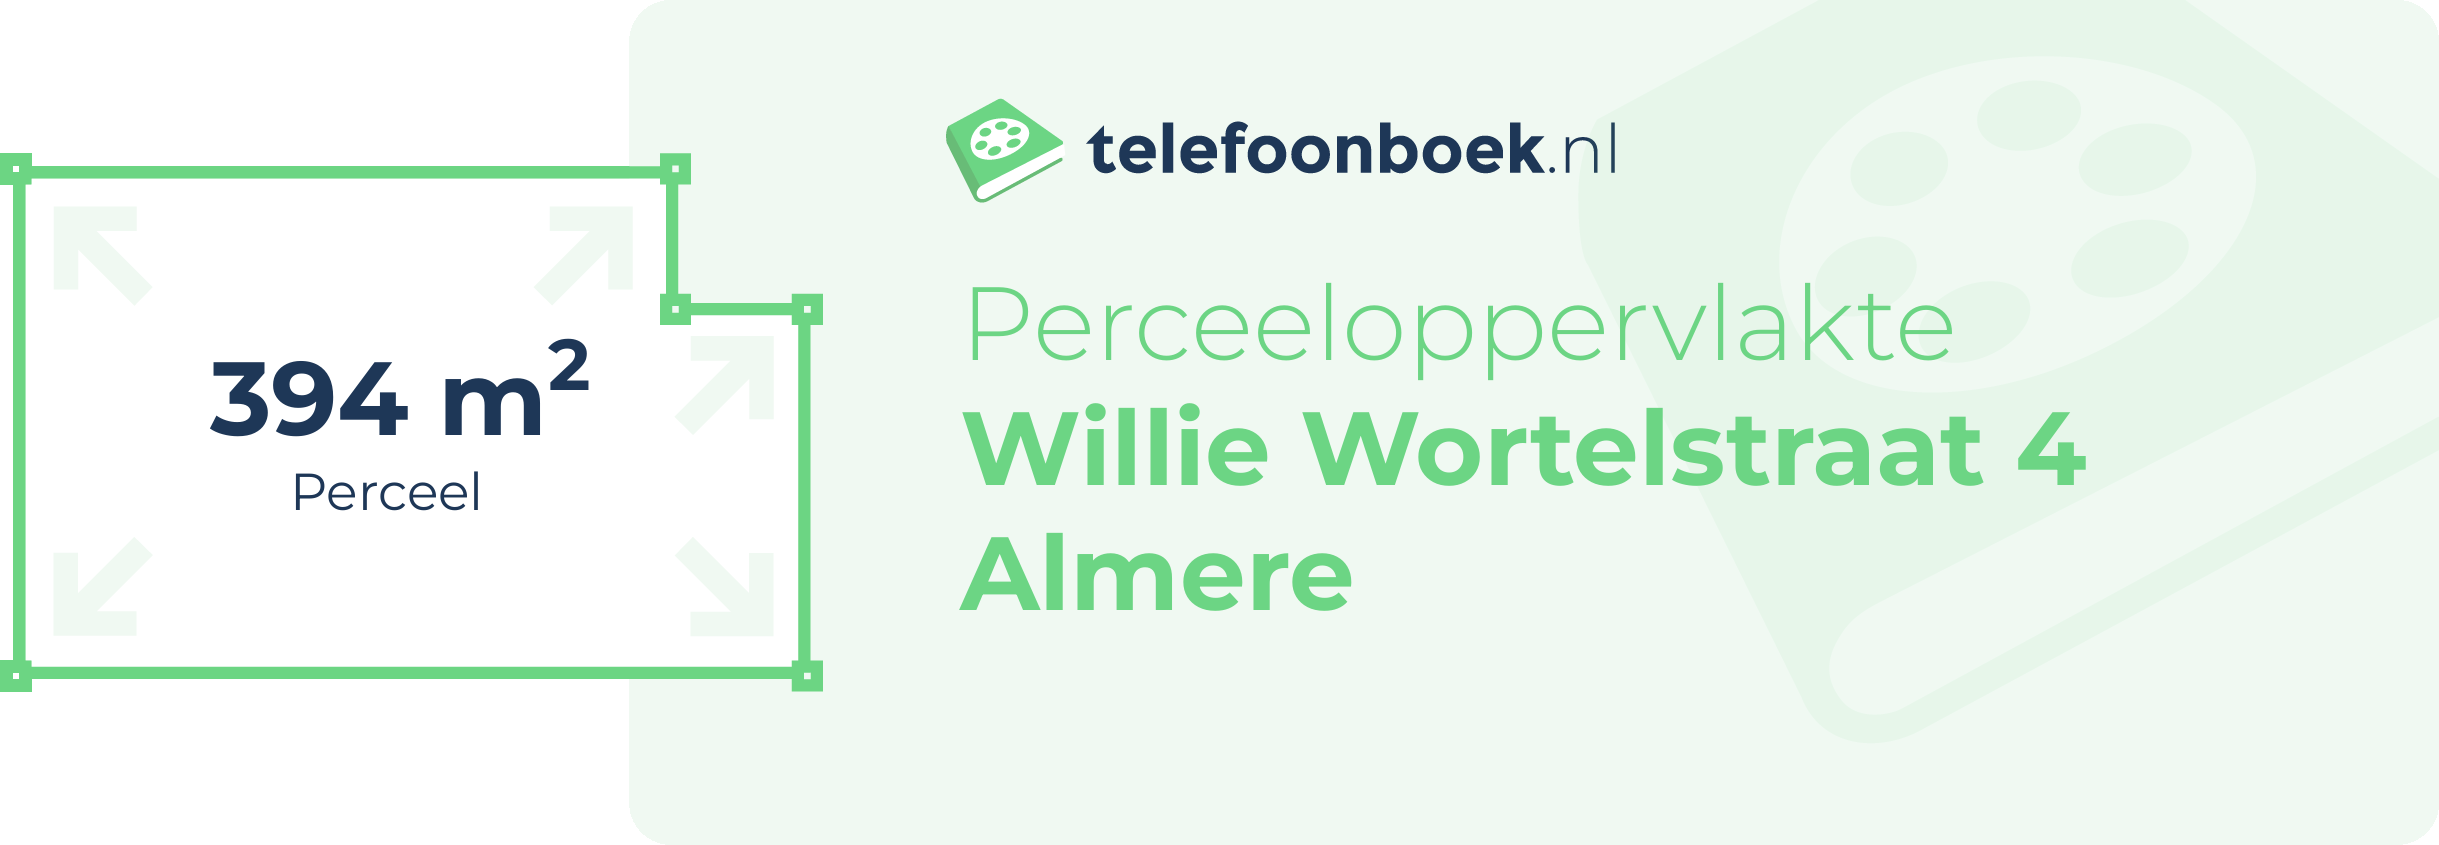 Perceeloppervlakte Willie Wortelstraat 4 Almere